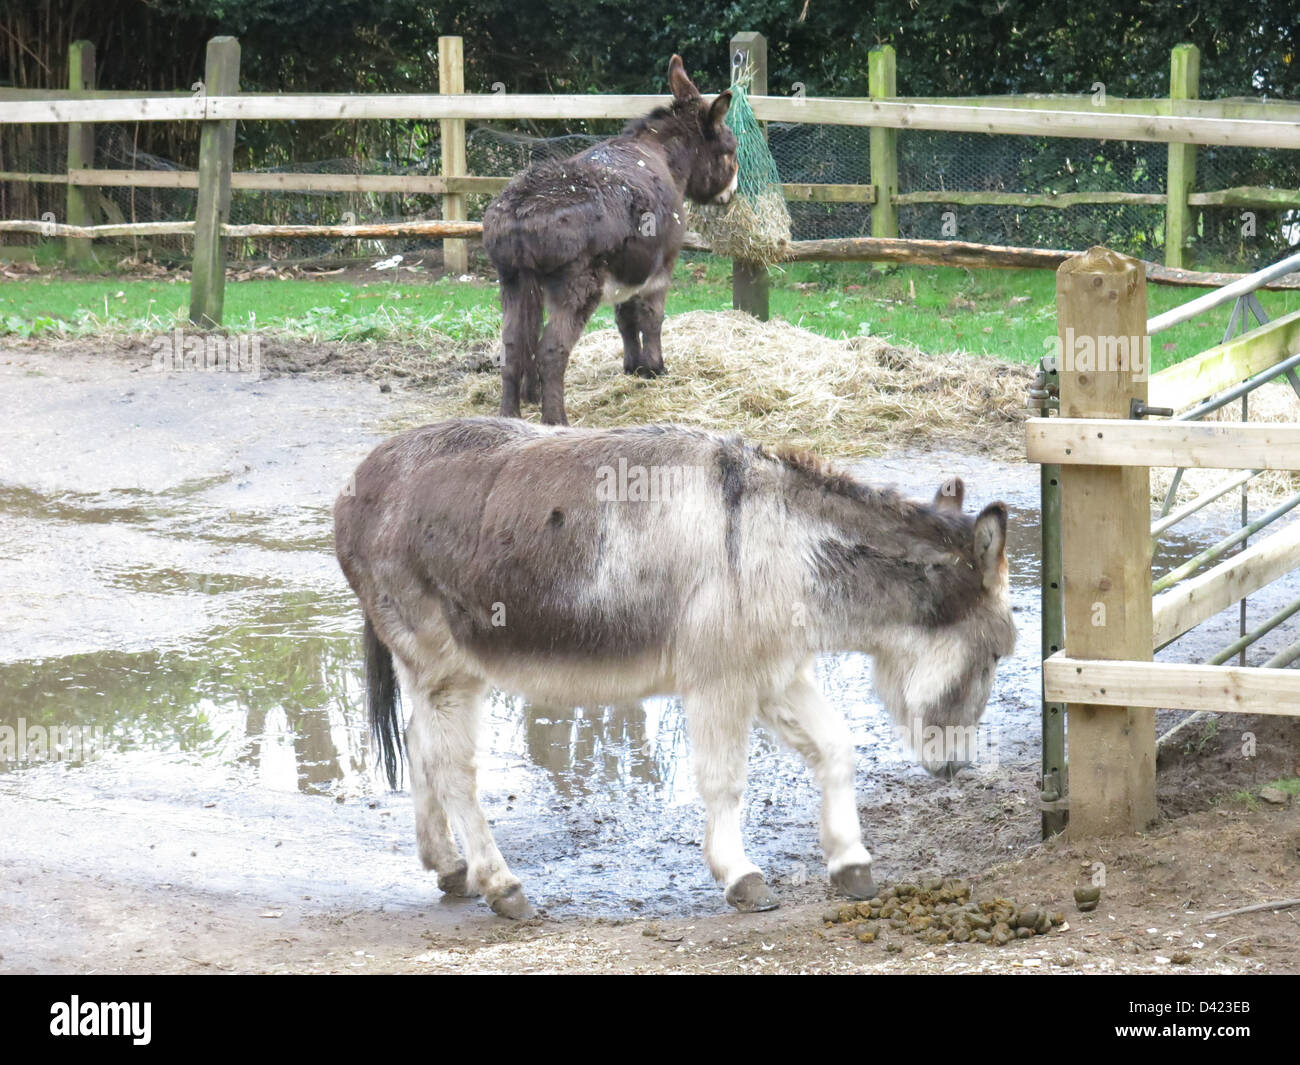 Two Donkeys Jan 2013 Stock Photo